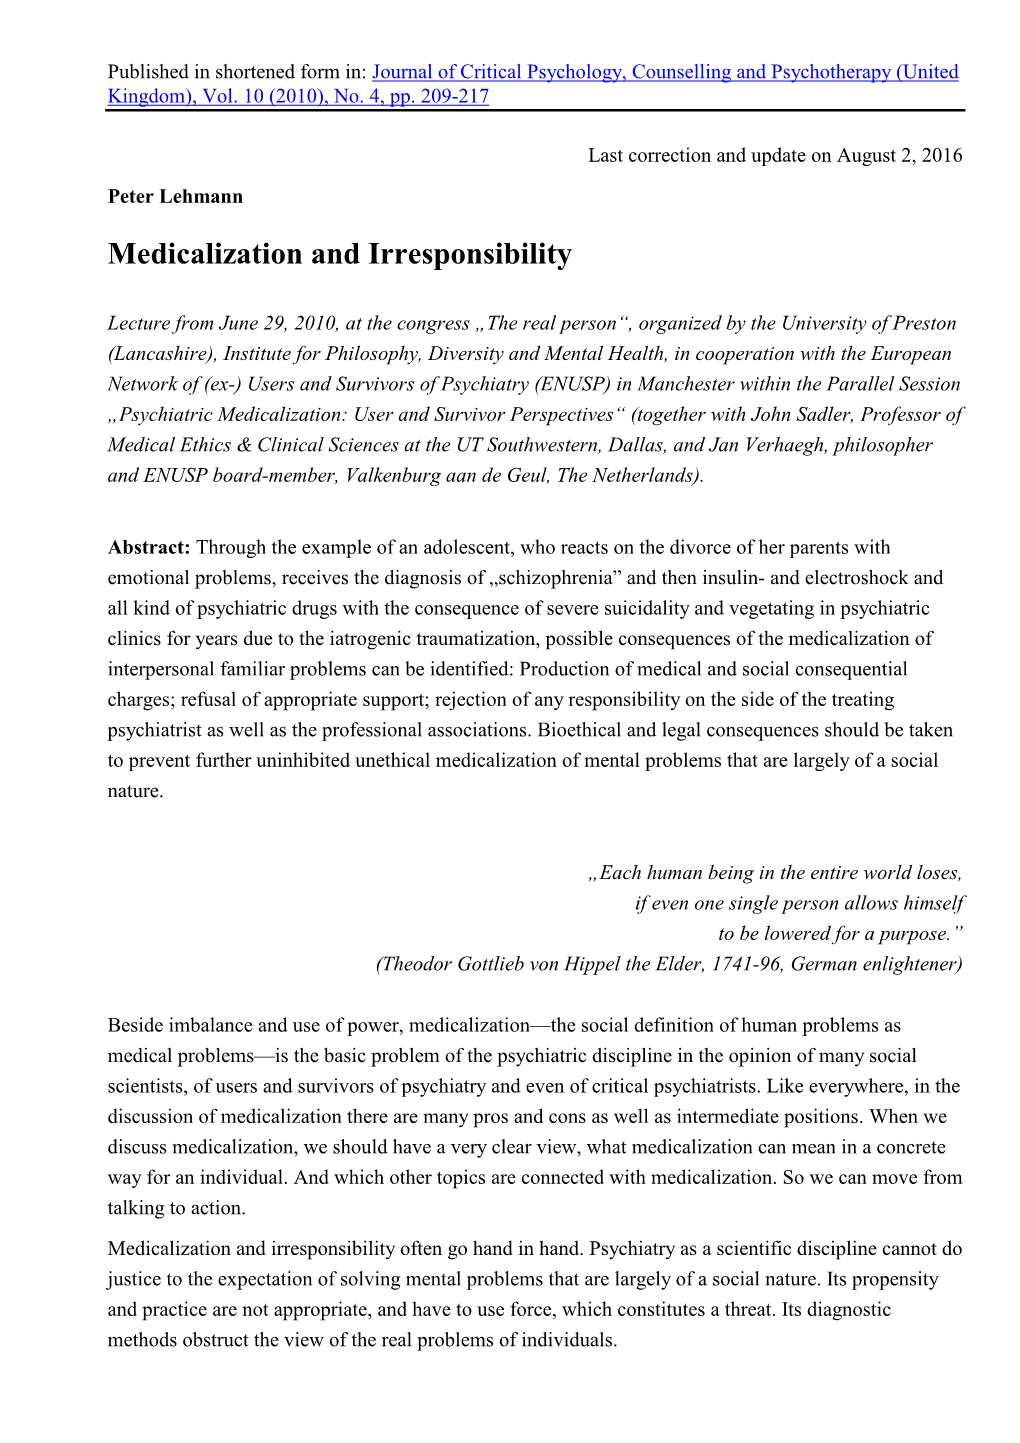 Medicalization and Irresponsibility